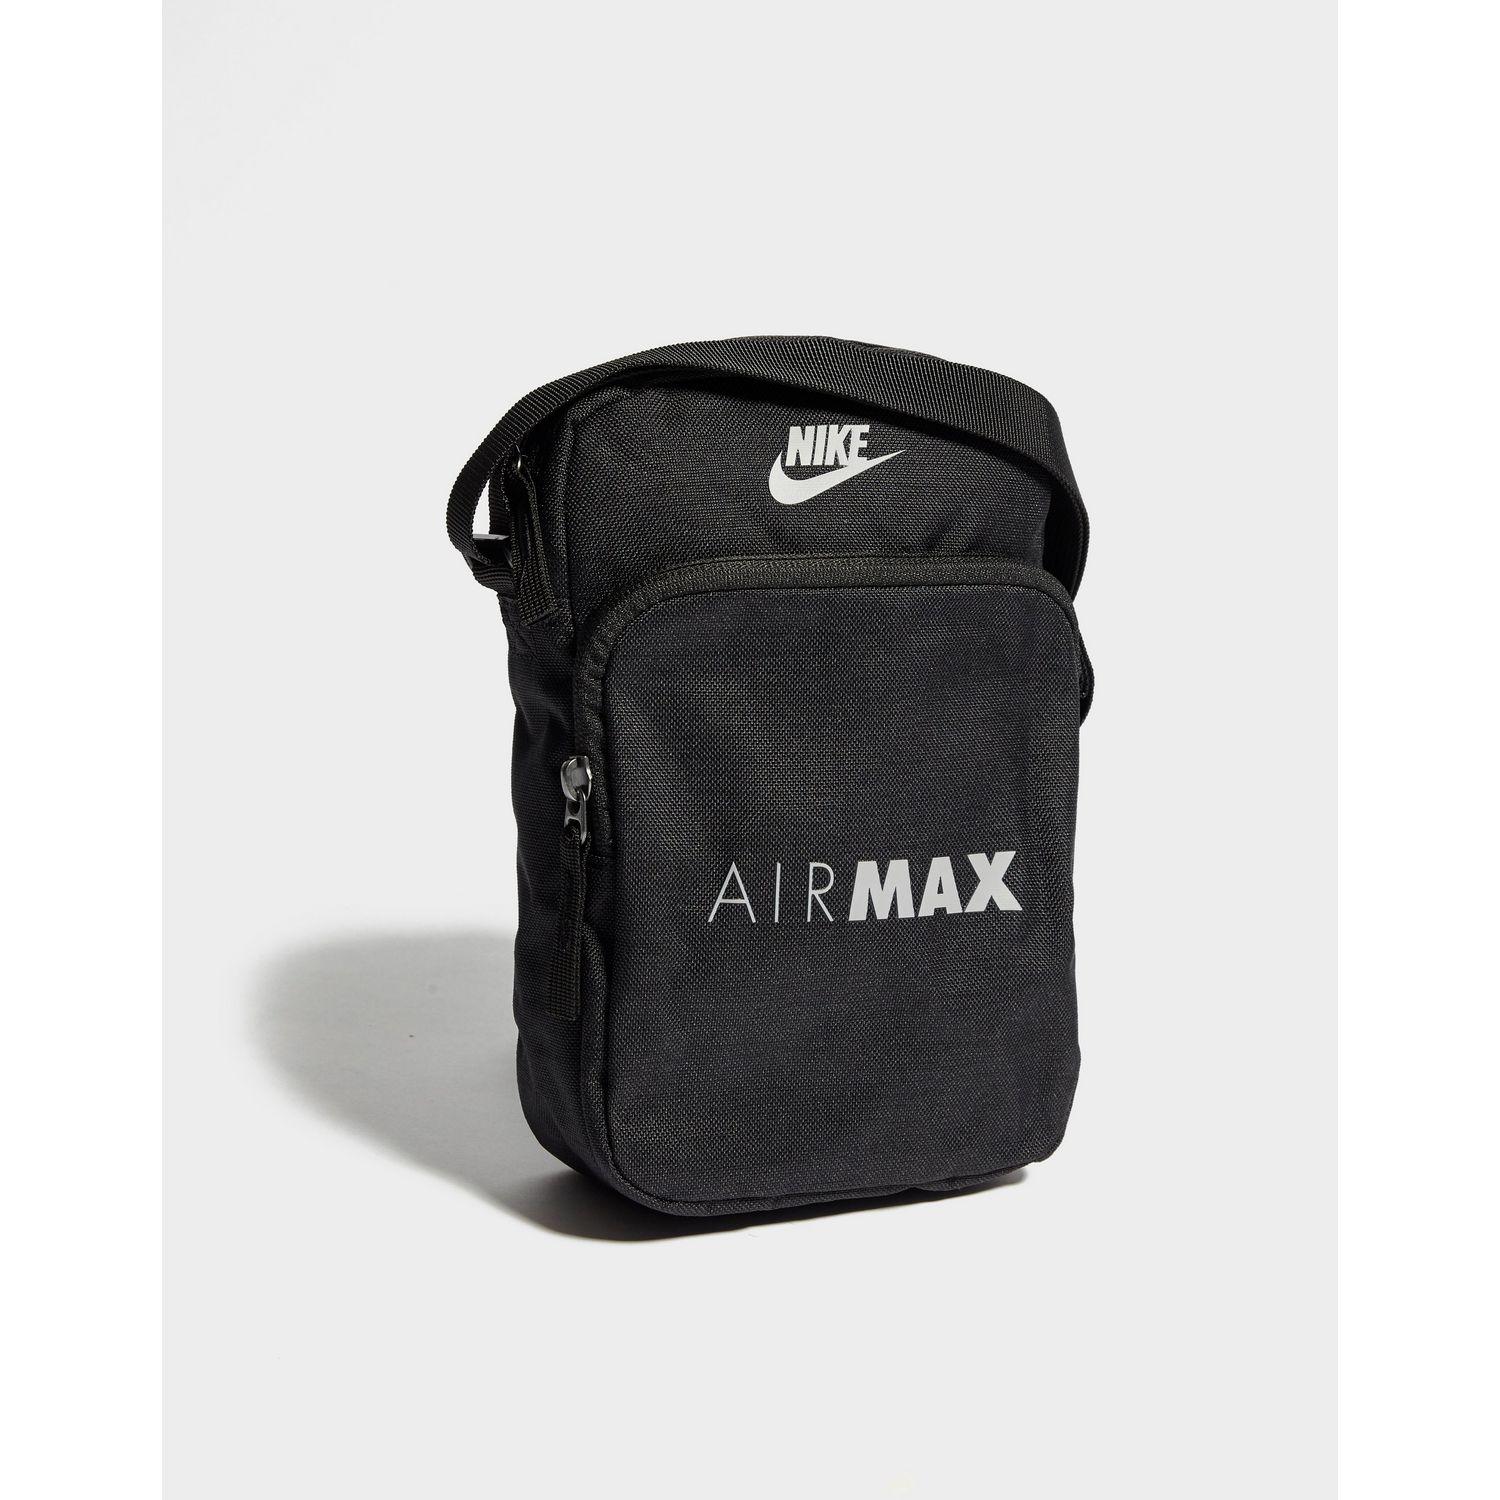 Nike Synthetic Air Max Crossbody Bag in 